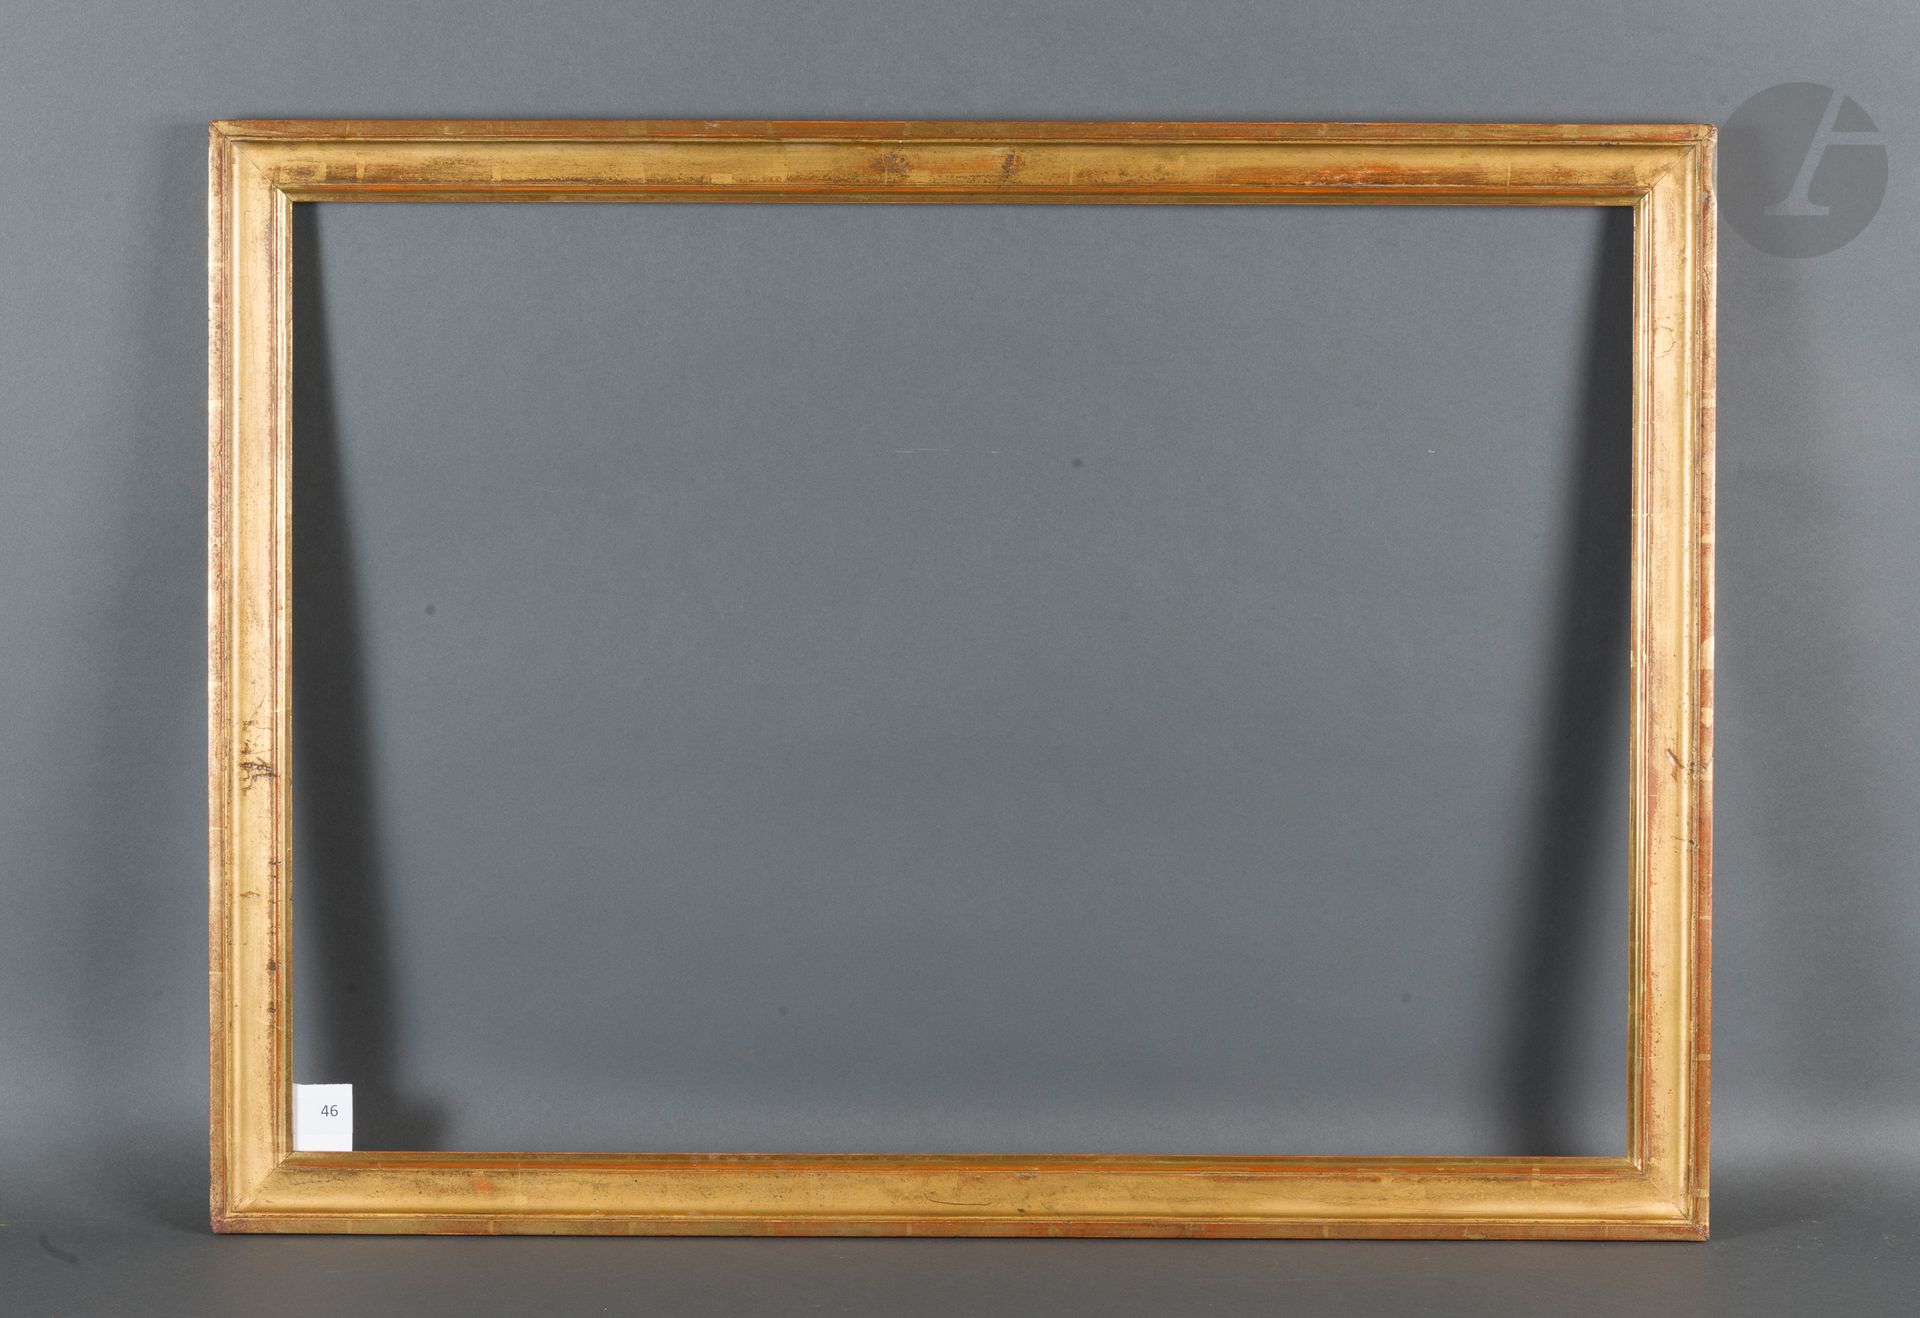 Null 模制和镀金的木杆。
18世纪末-19世纪初（修复）。
53,2 x 74,7 cm - 外形 : 4,5 cm